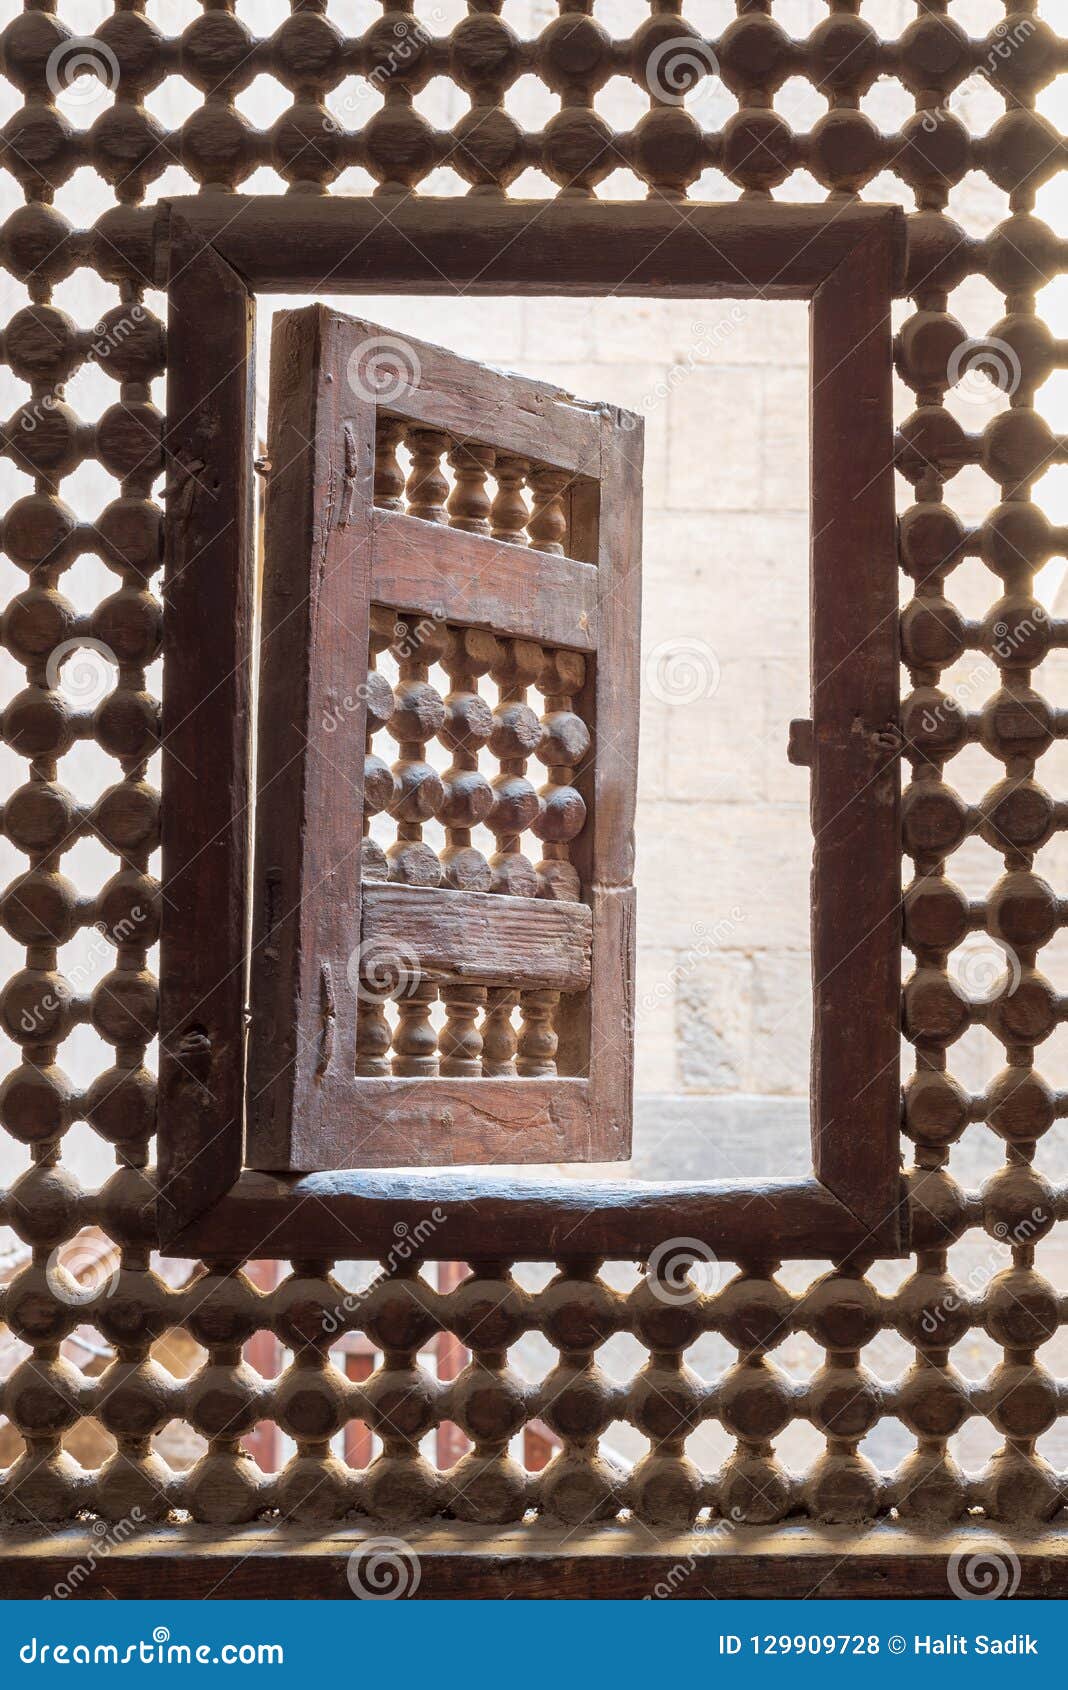 wooden latticed window mashrabiya with one small swinging sash